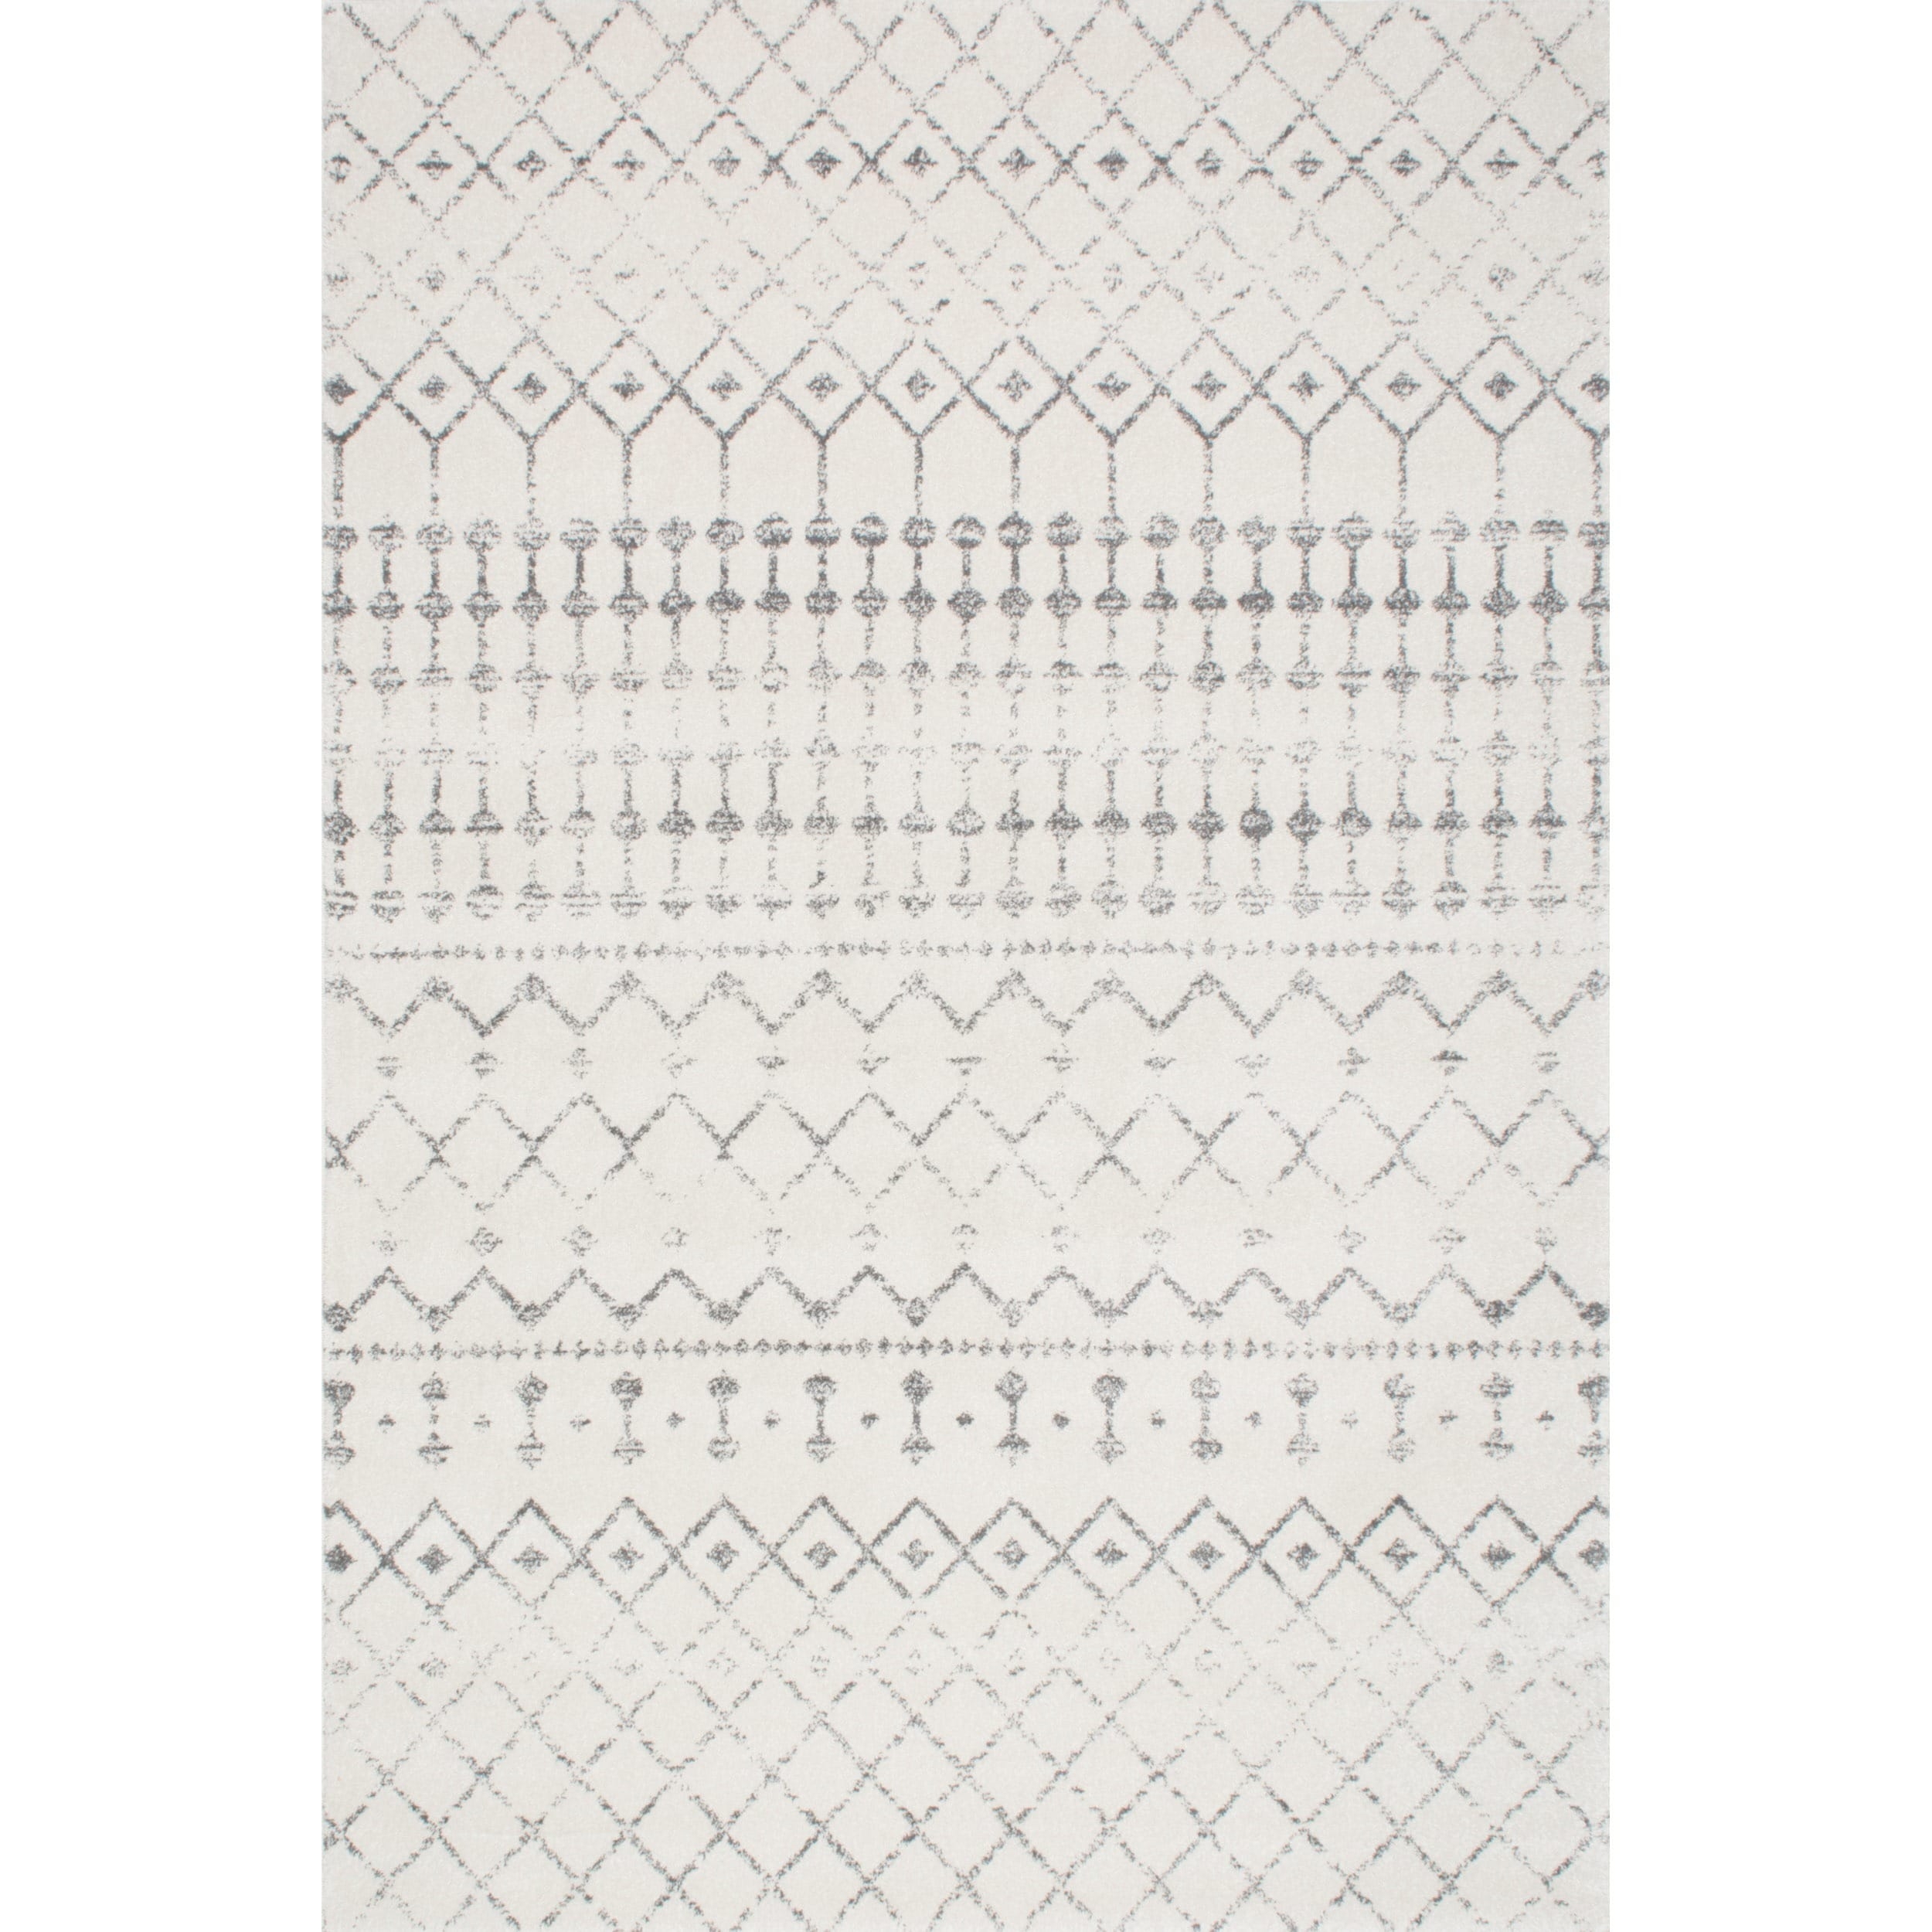 Geometric Moroccan Beads Grey Rug (8x10) - Image 0